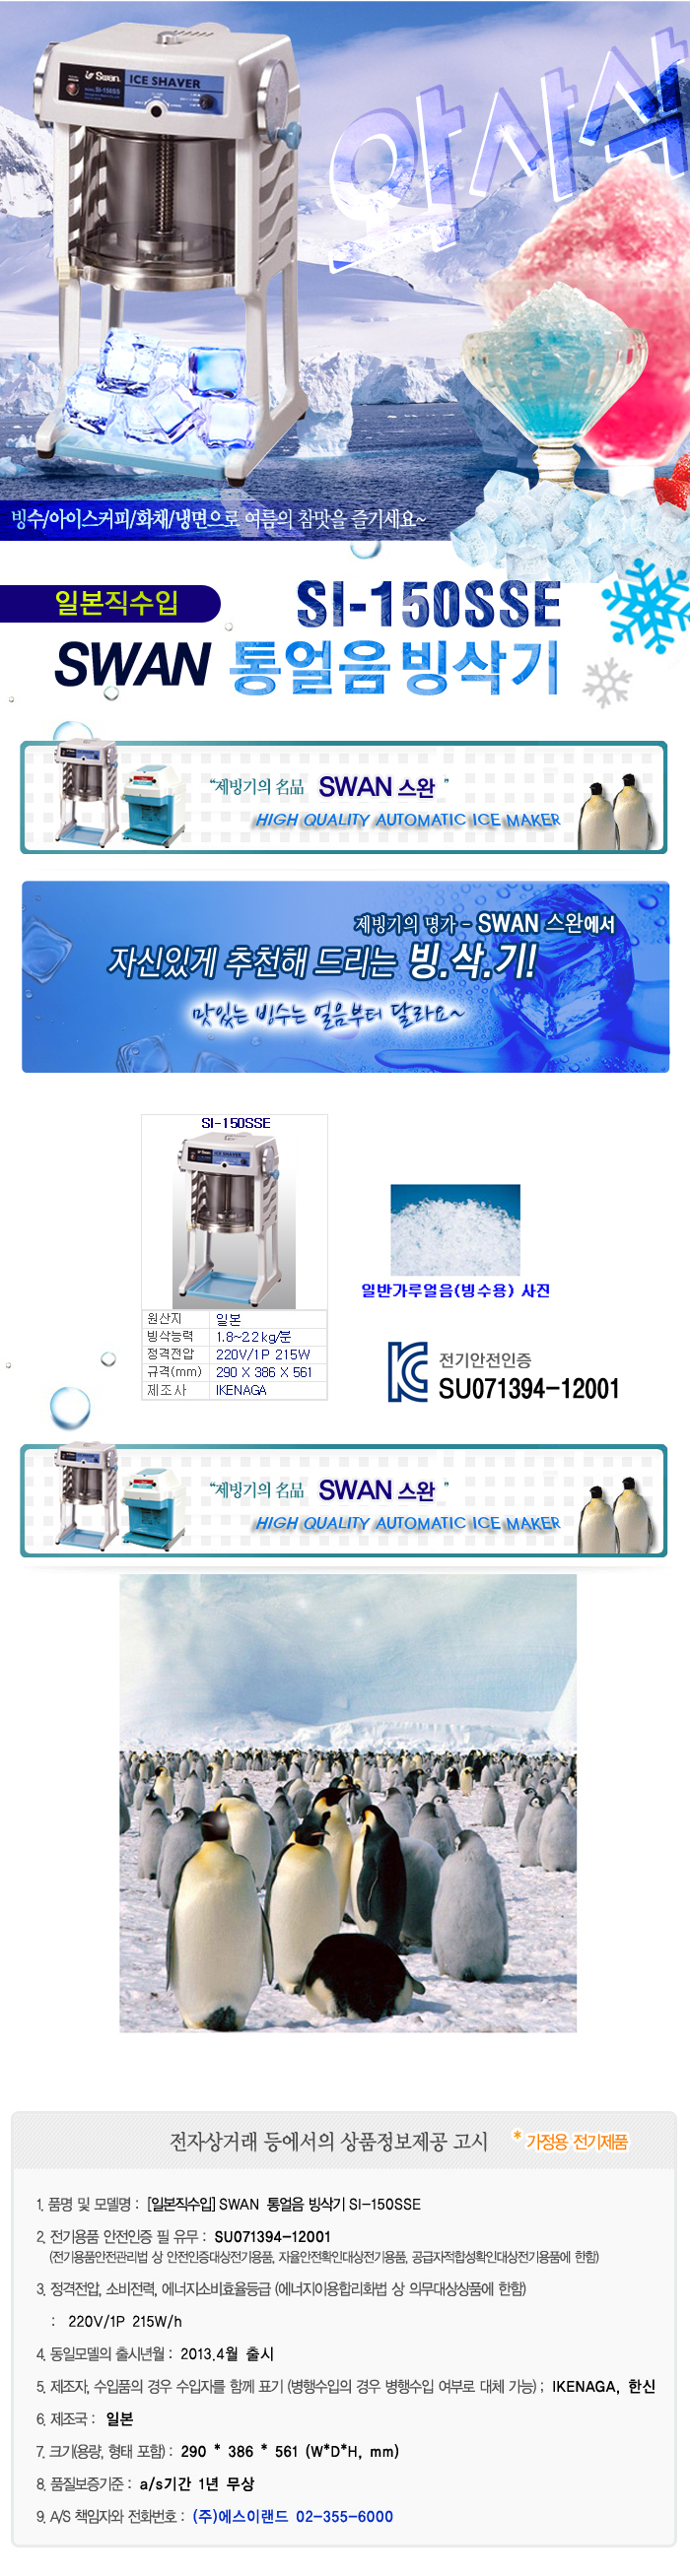 SWAN 통얼음 빙삭기 SI-150SSE,일본직수입빙삭기,빙삭기,제빙기,팥빙수기계,팥빙수기,빙수기,빙수기계,얼음